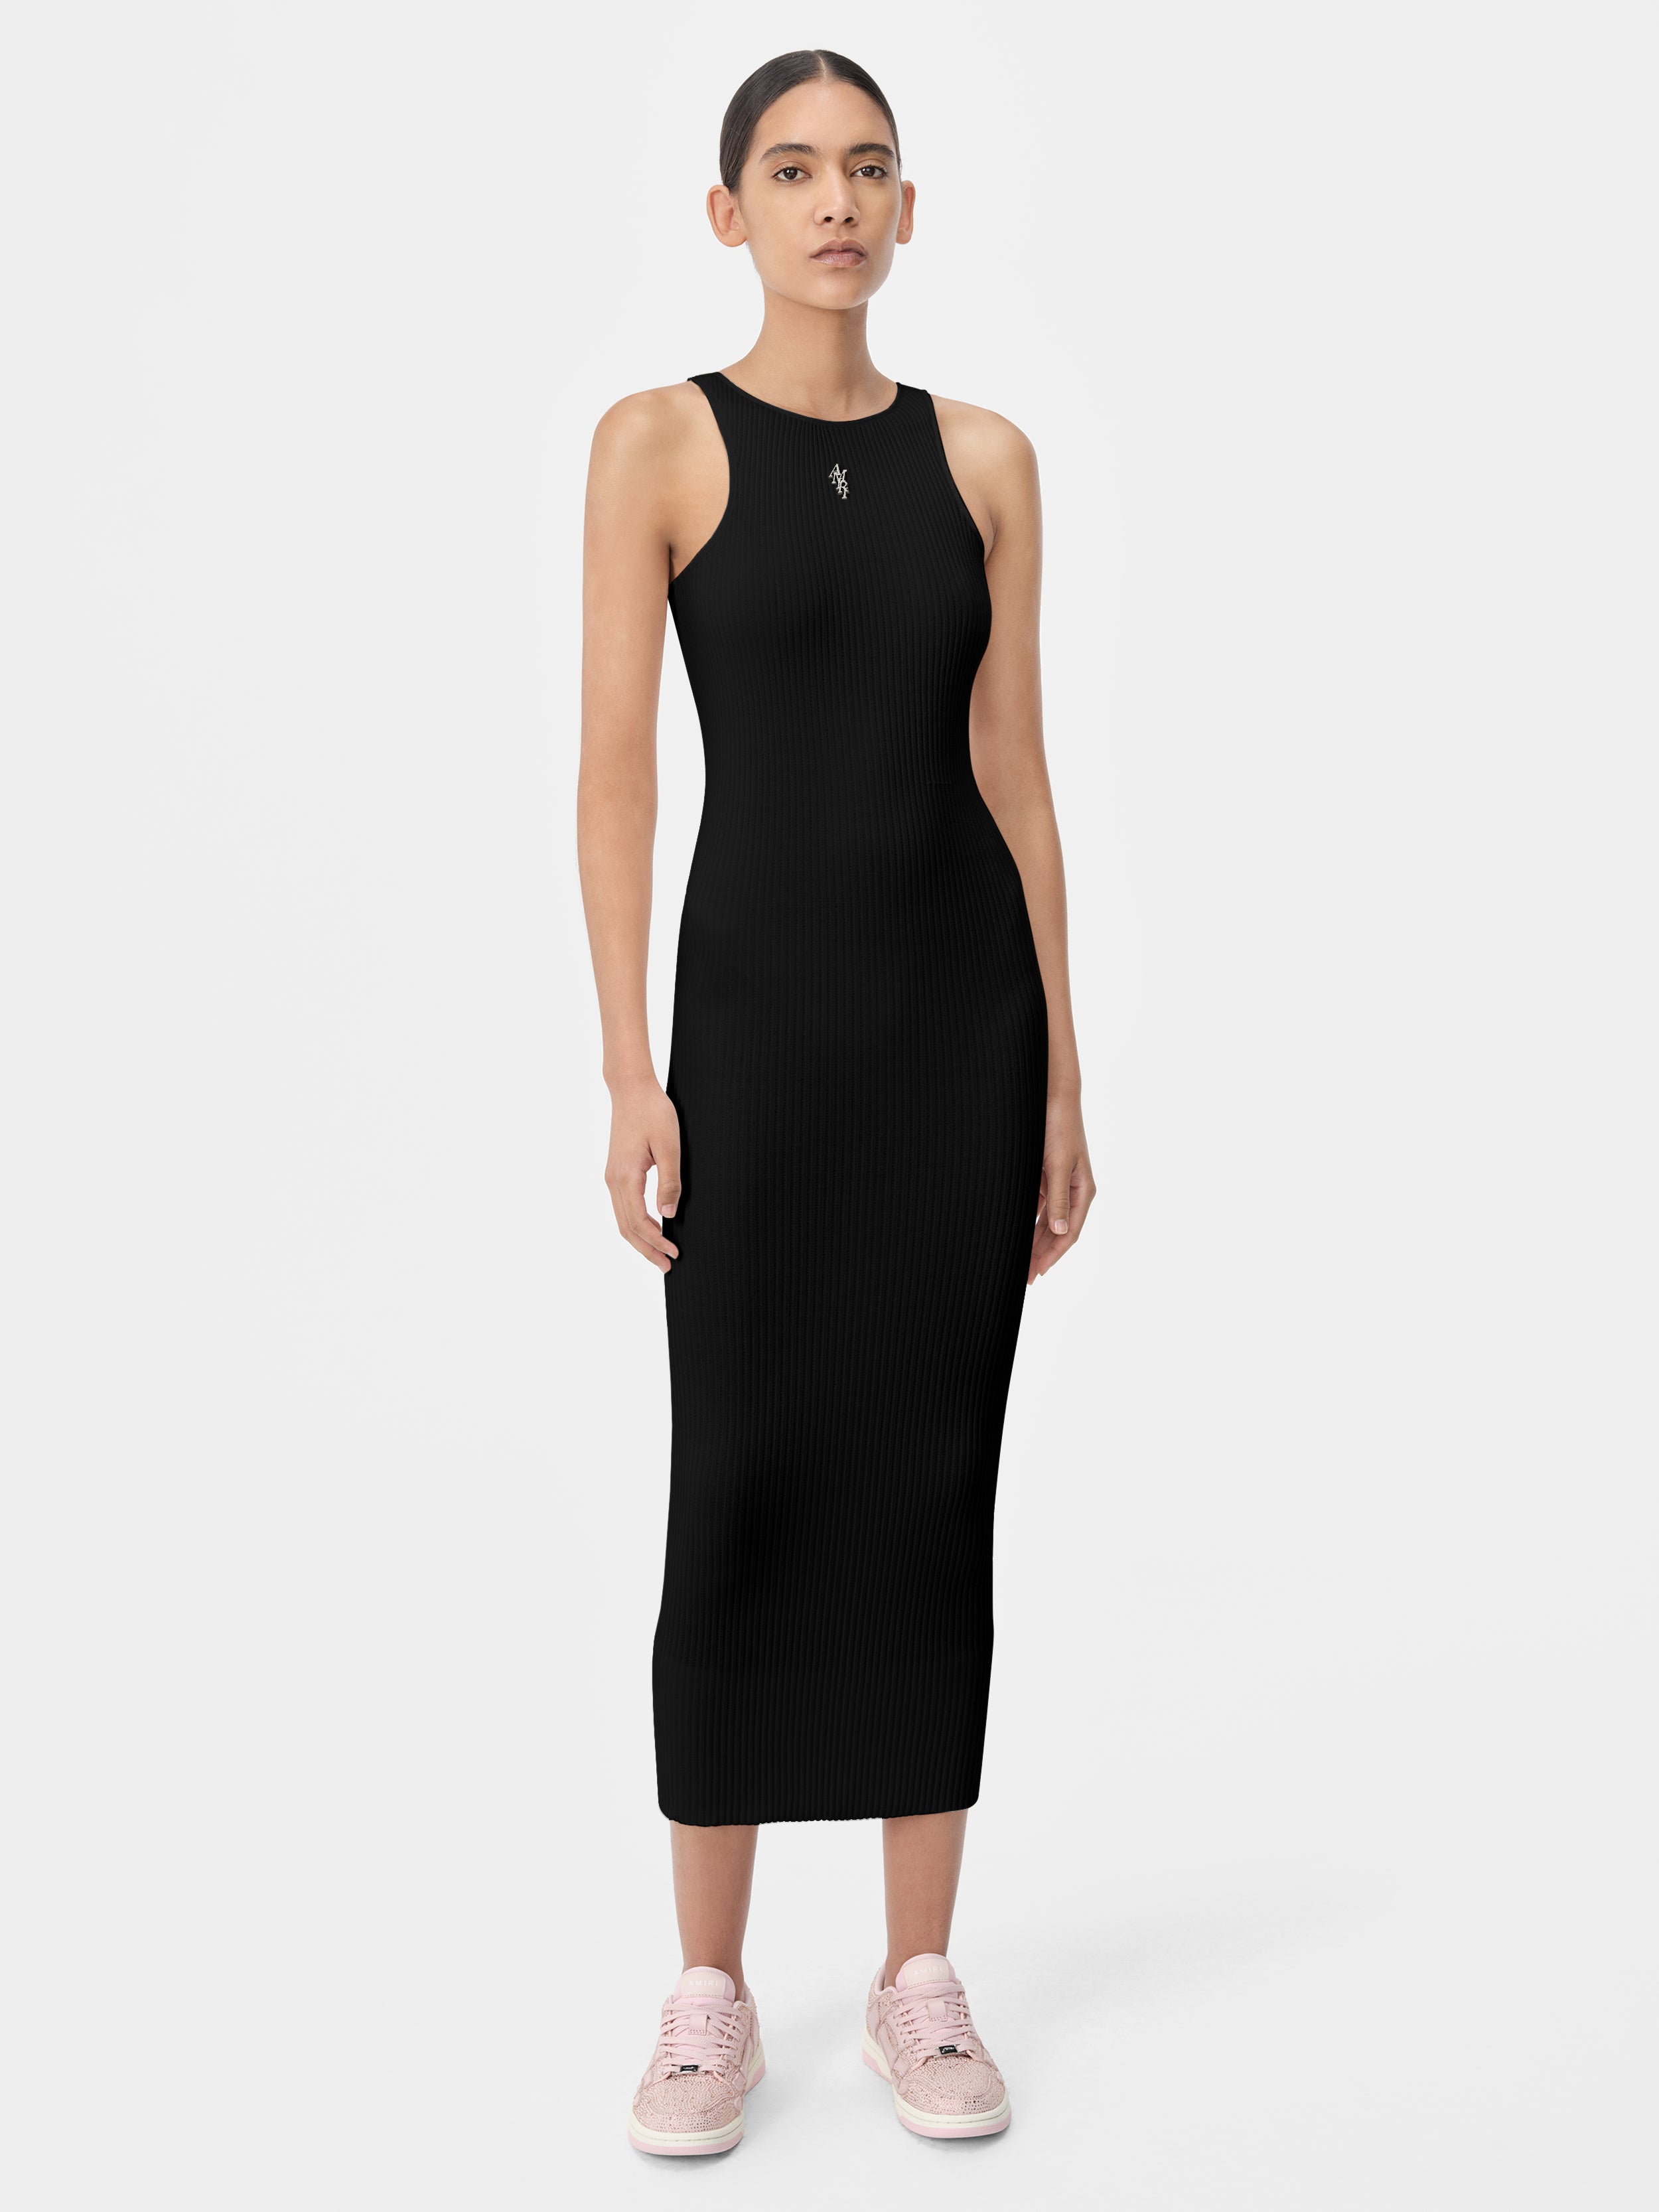 Product WOMEN - WOMEN'S AMIRI STACKED MAXI DRESS - Black featured image